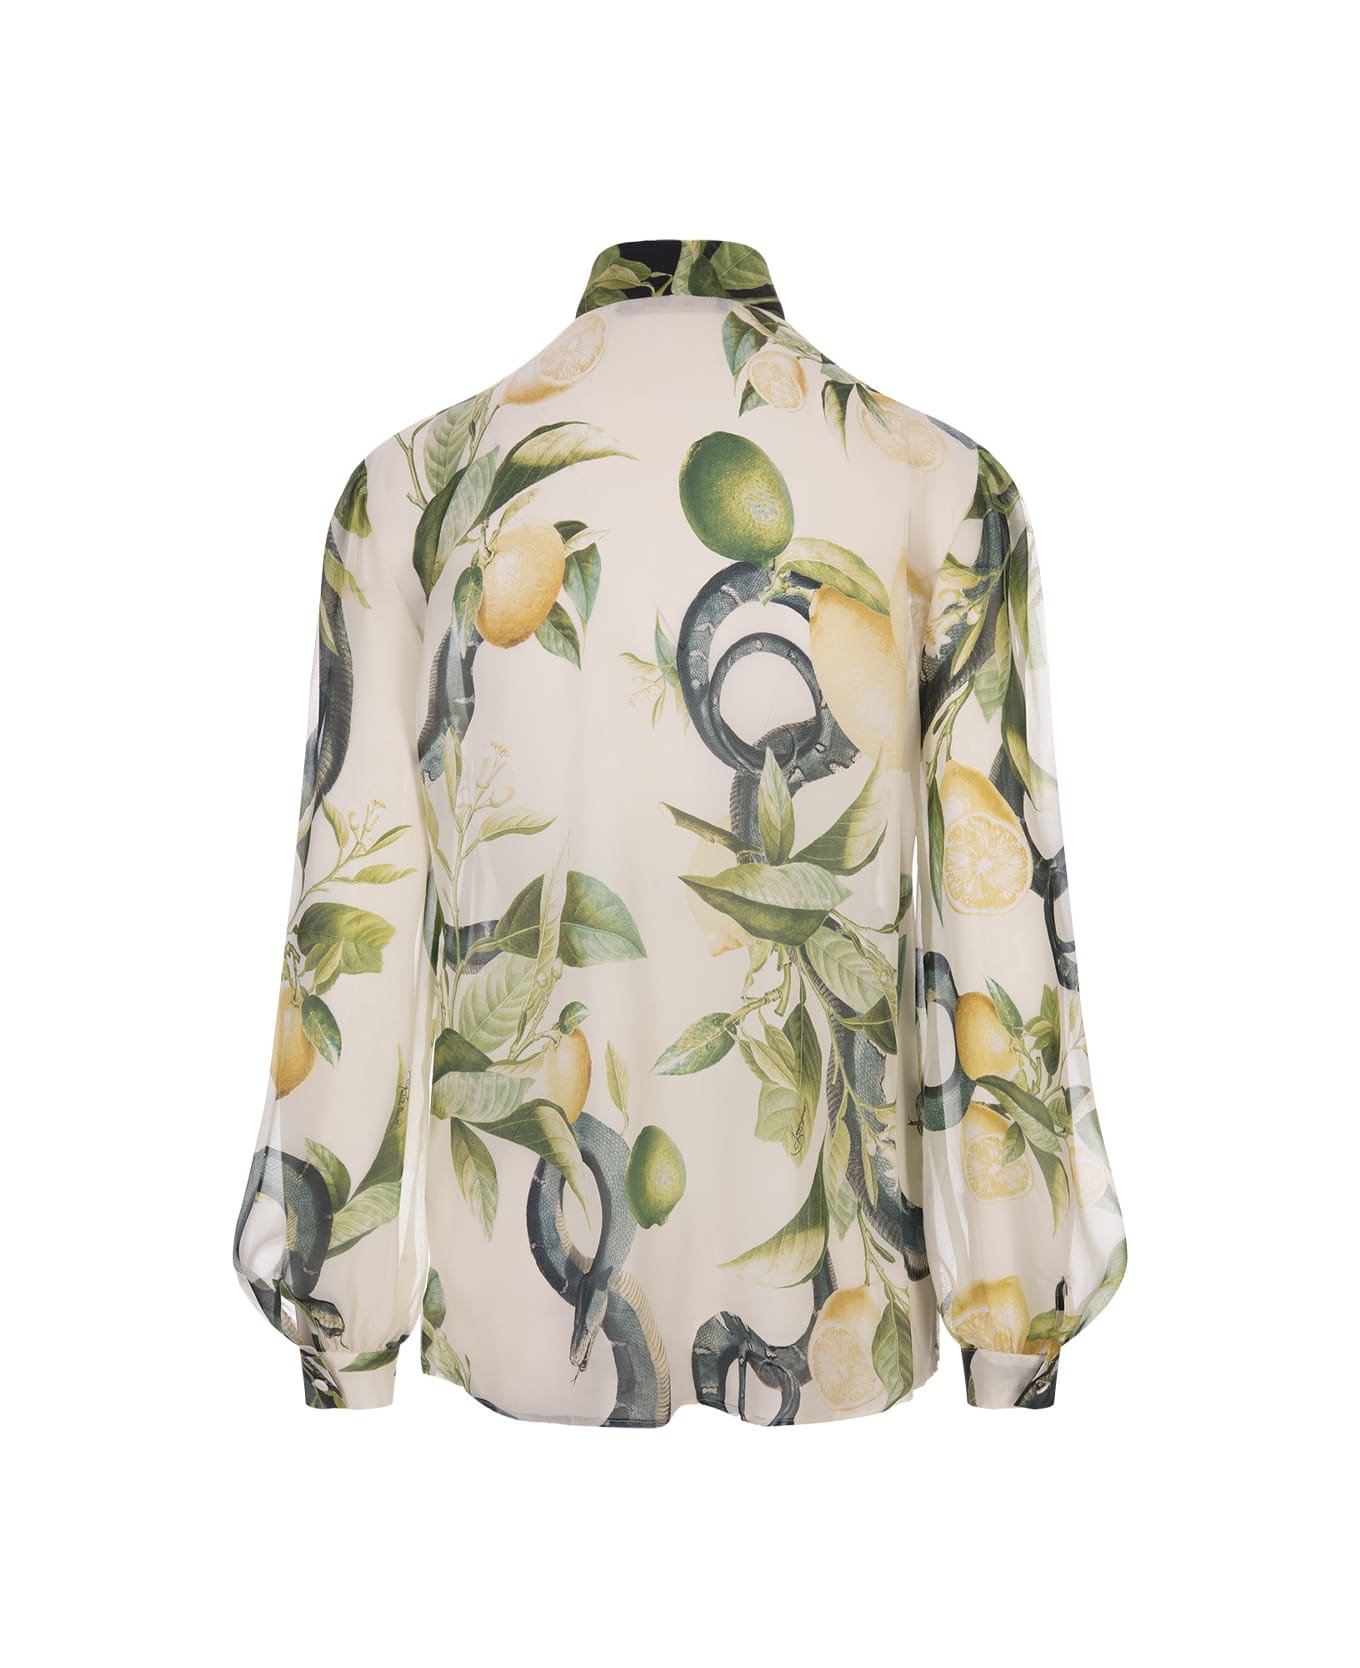 Roberto Cavalli Ivory Shirt With Lemons Print - Multicolor